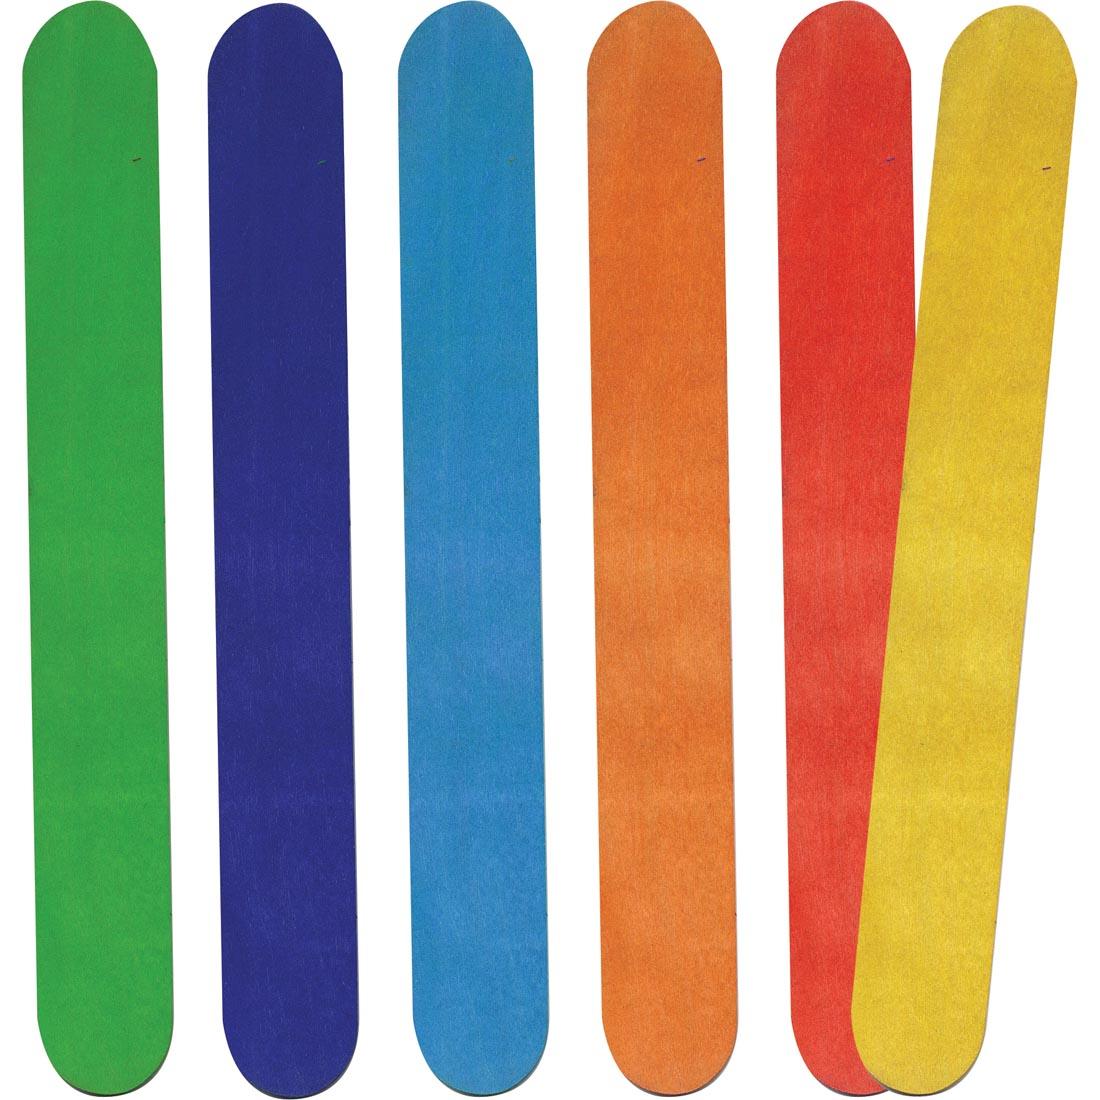 Creativity Street Jumbo Size Craft Sticks in assorted colors